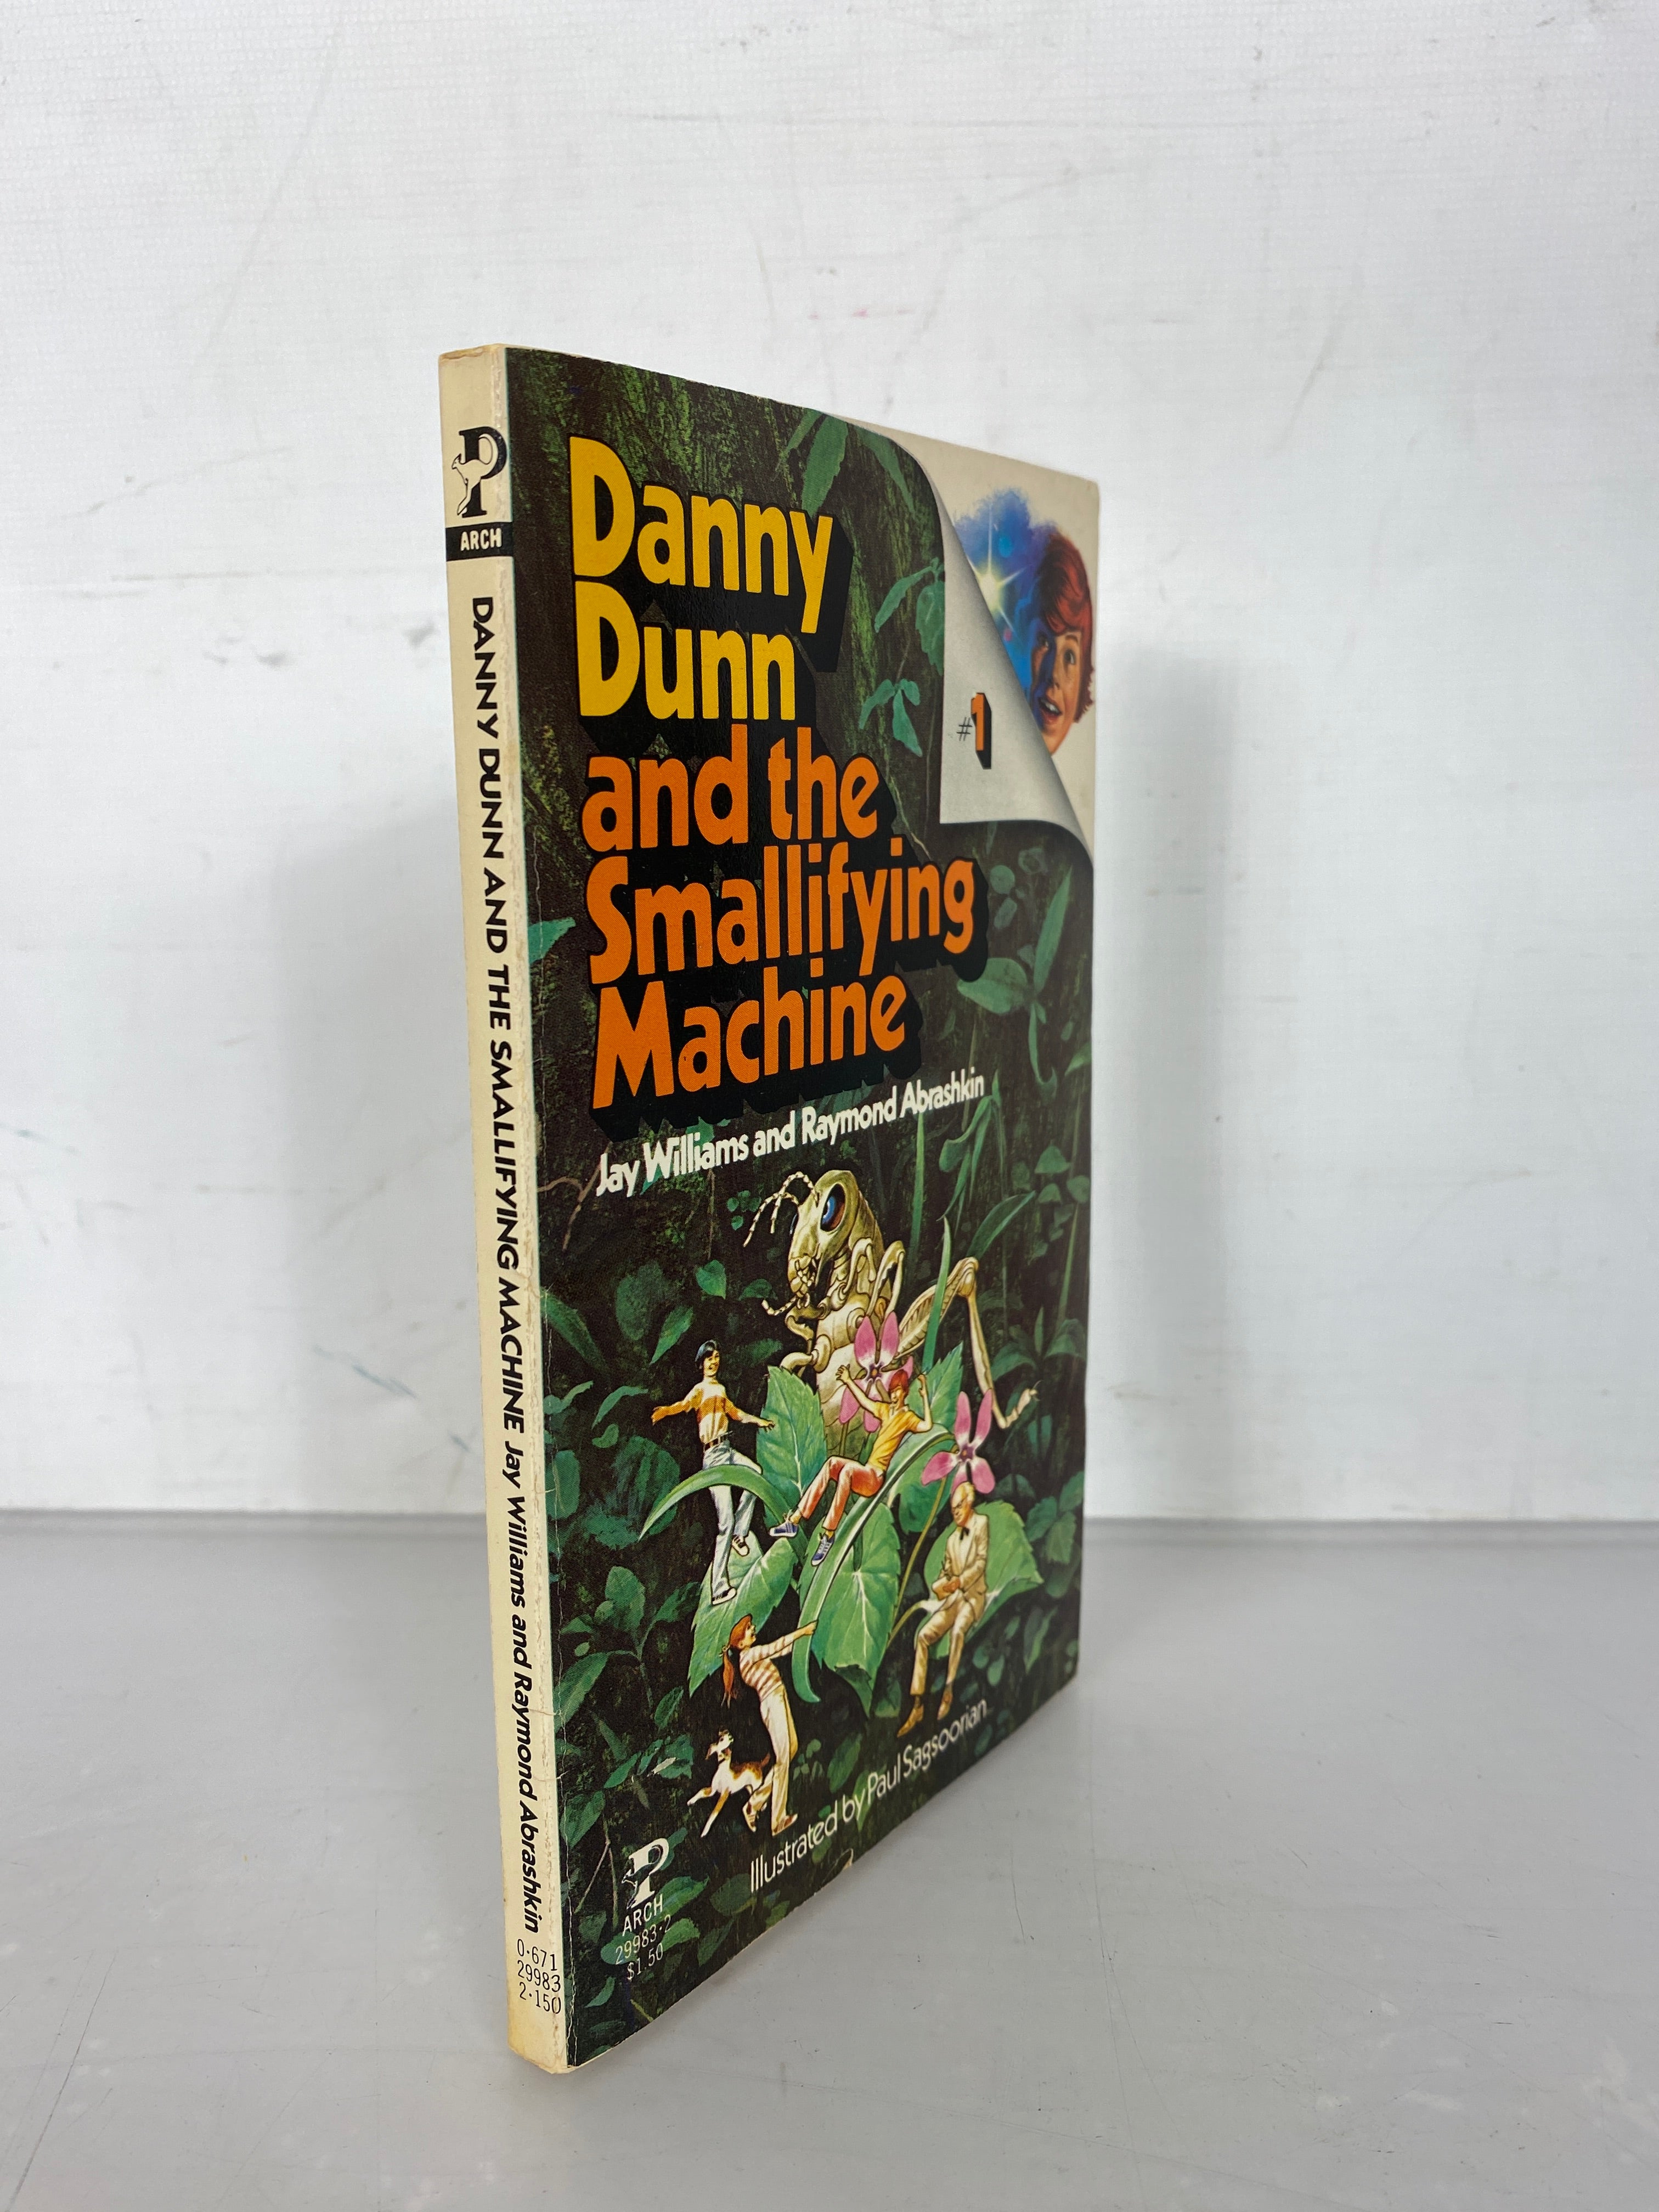 Lot of 4 Danny Dunn Books: 1, 13, 14, 15 Jay Williams and Raymond Abrashkin SC